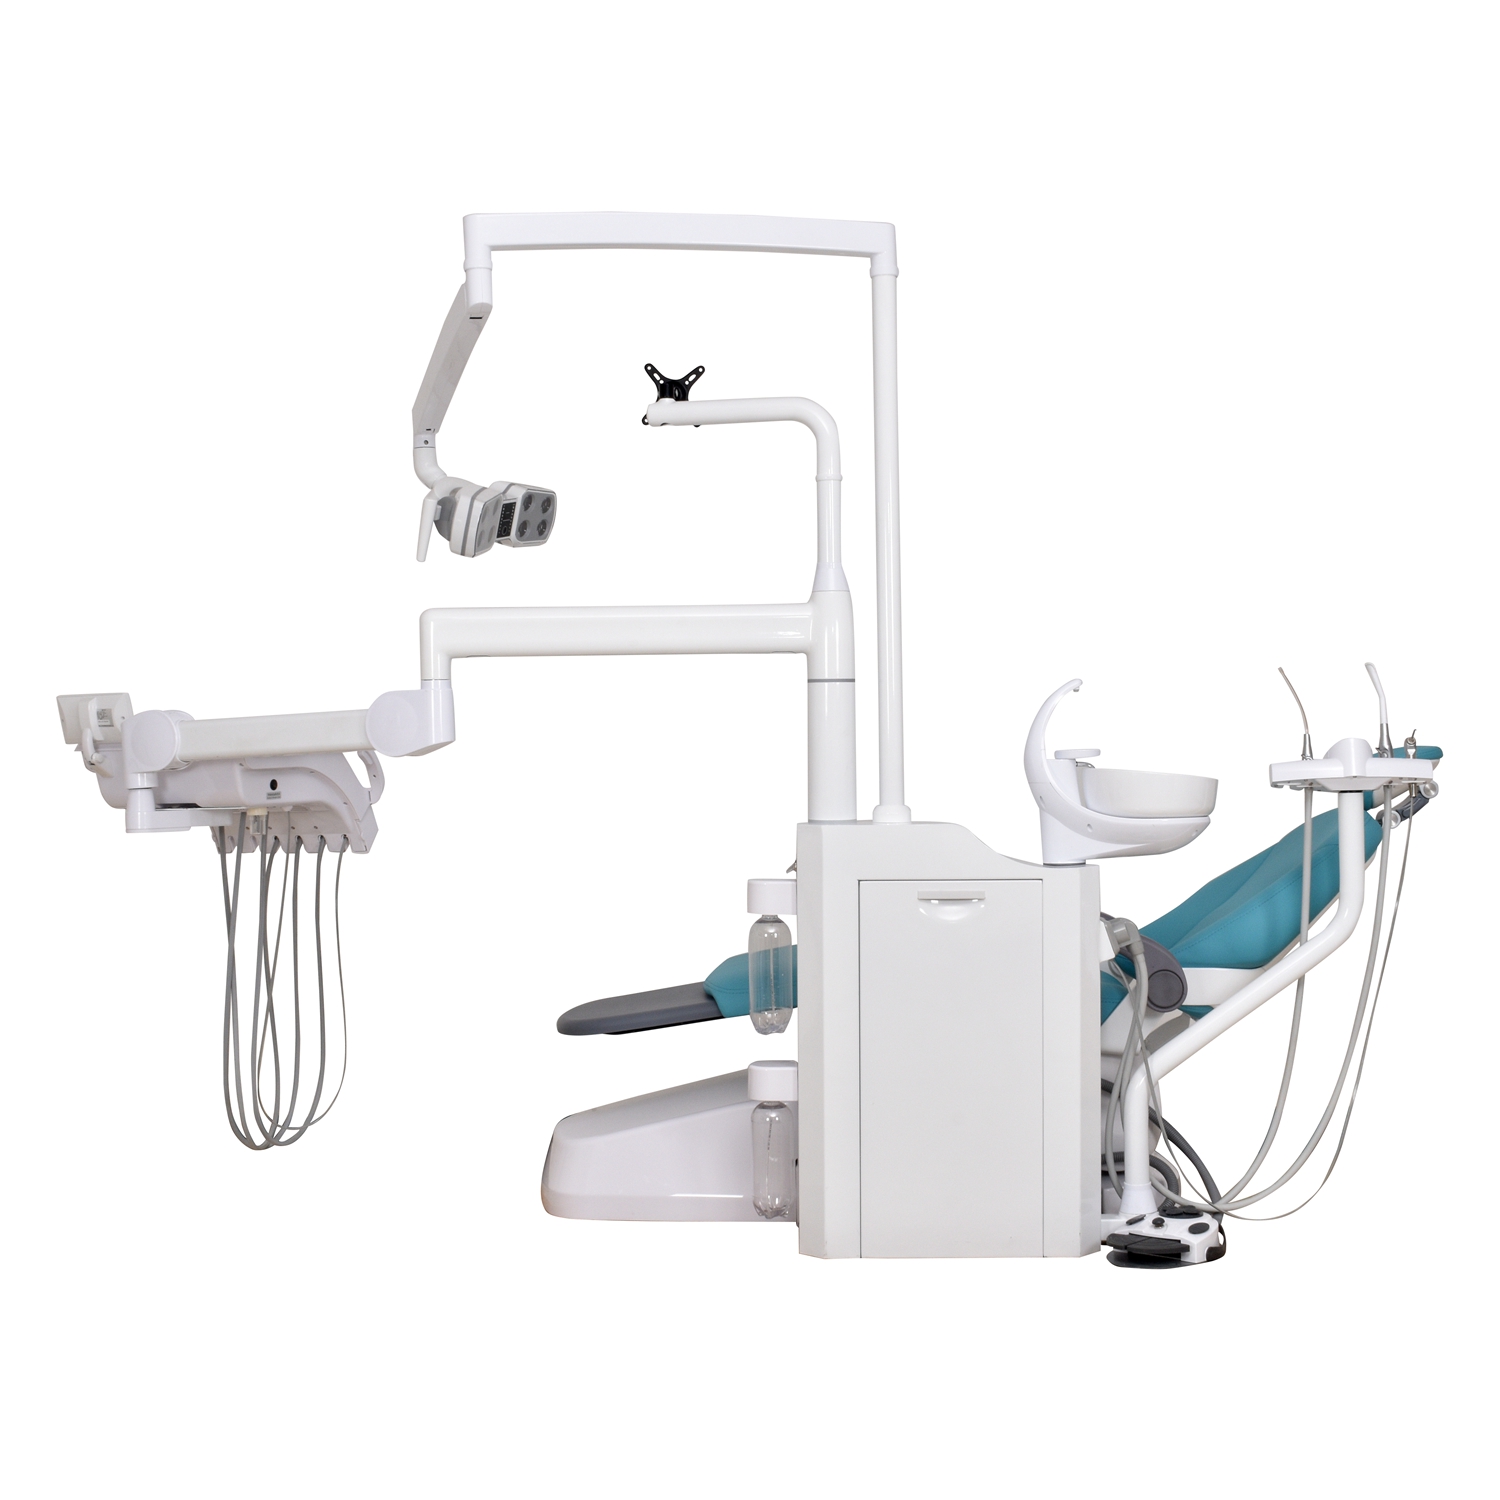 TY809 Dental chair